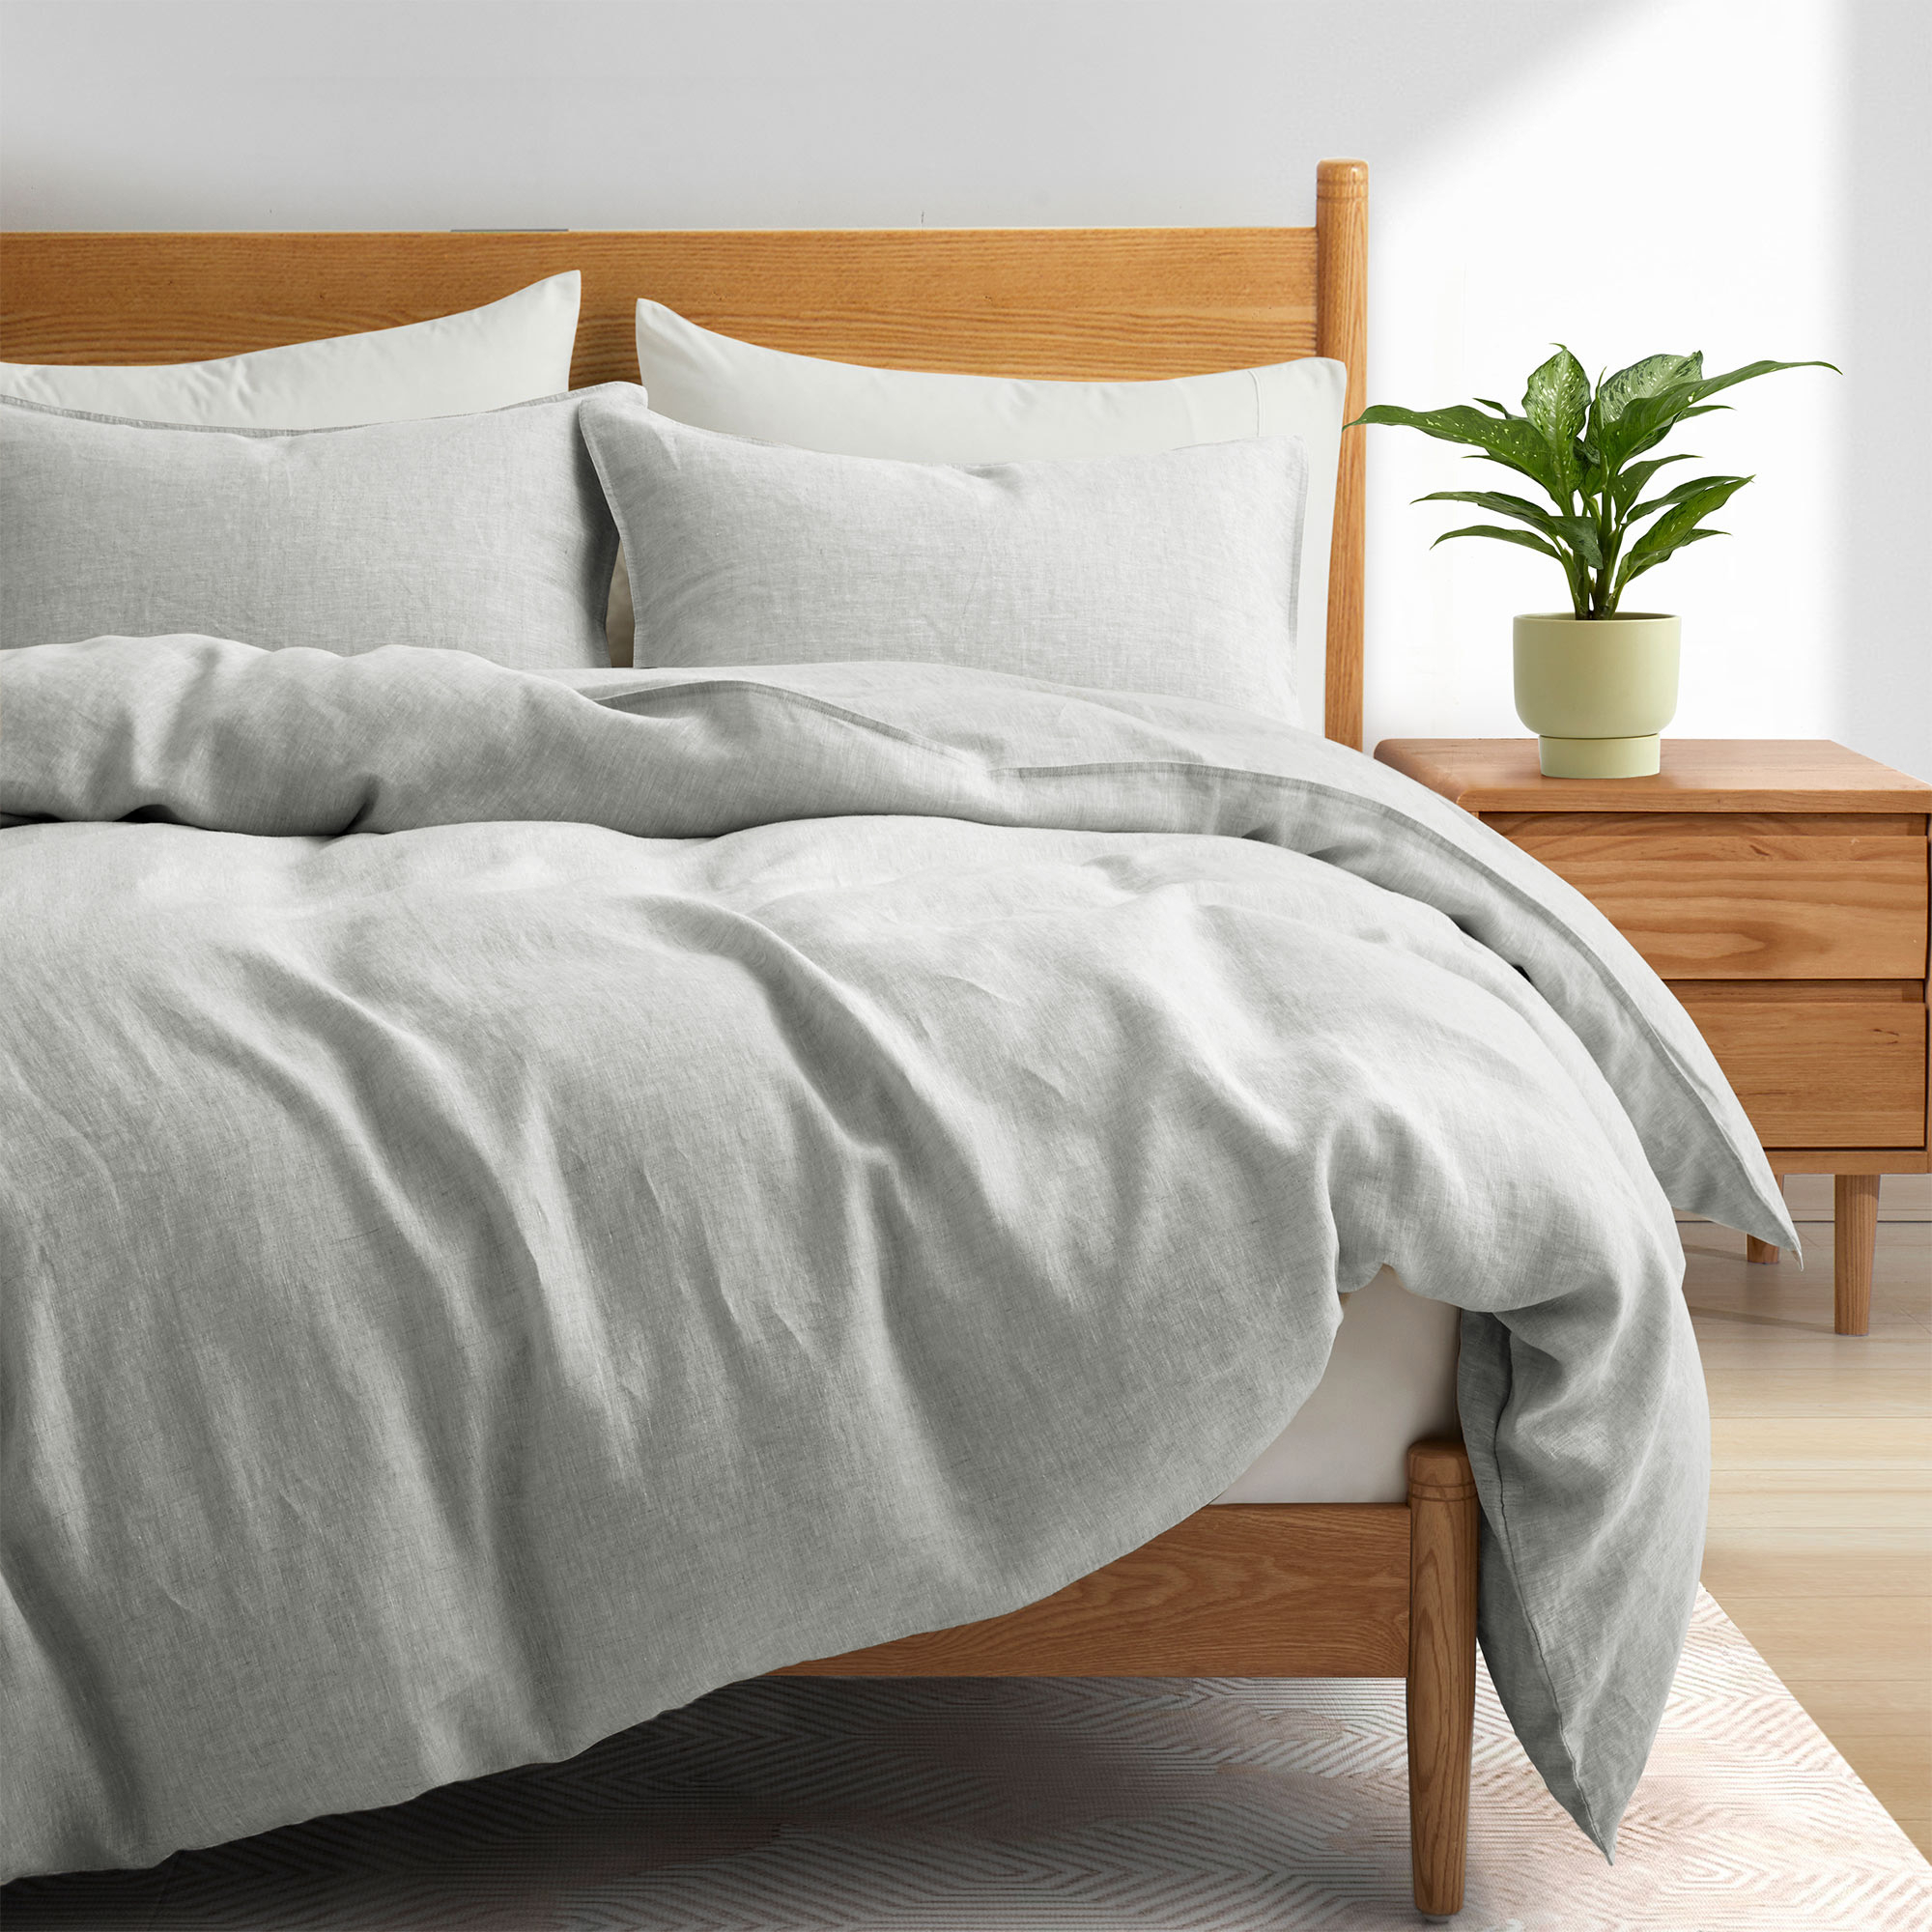 Premium Flax Linen Duvet Cover Set With Pillow Shams Breathable Moisture Wicking Bedding Set - Light Gray, King